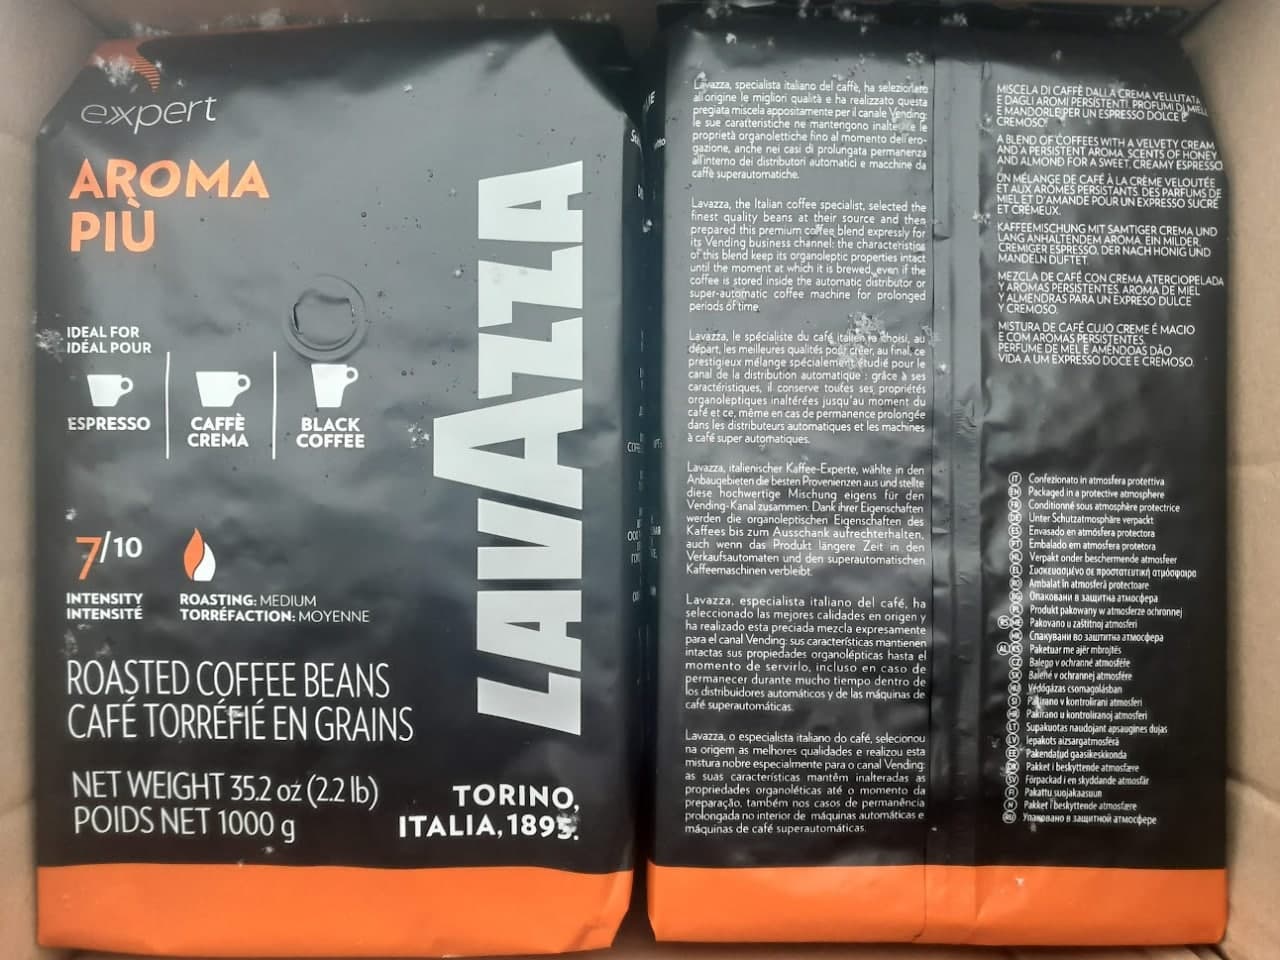 Зерновой кофе "LAVAZZA" Expert Aroma Piu